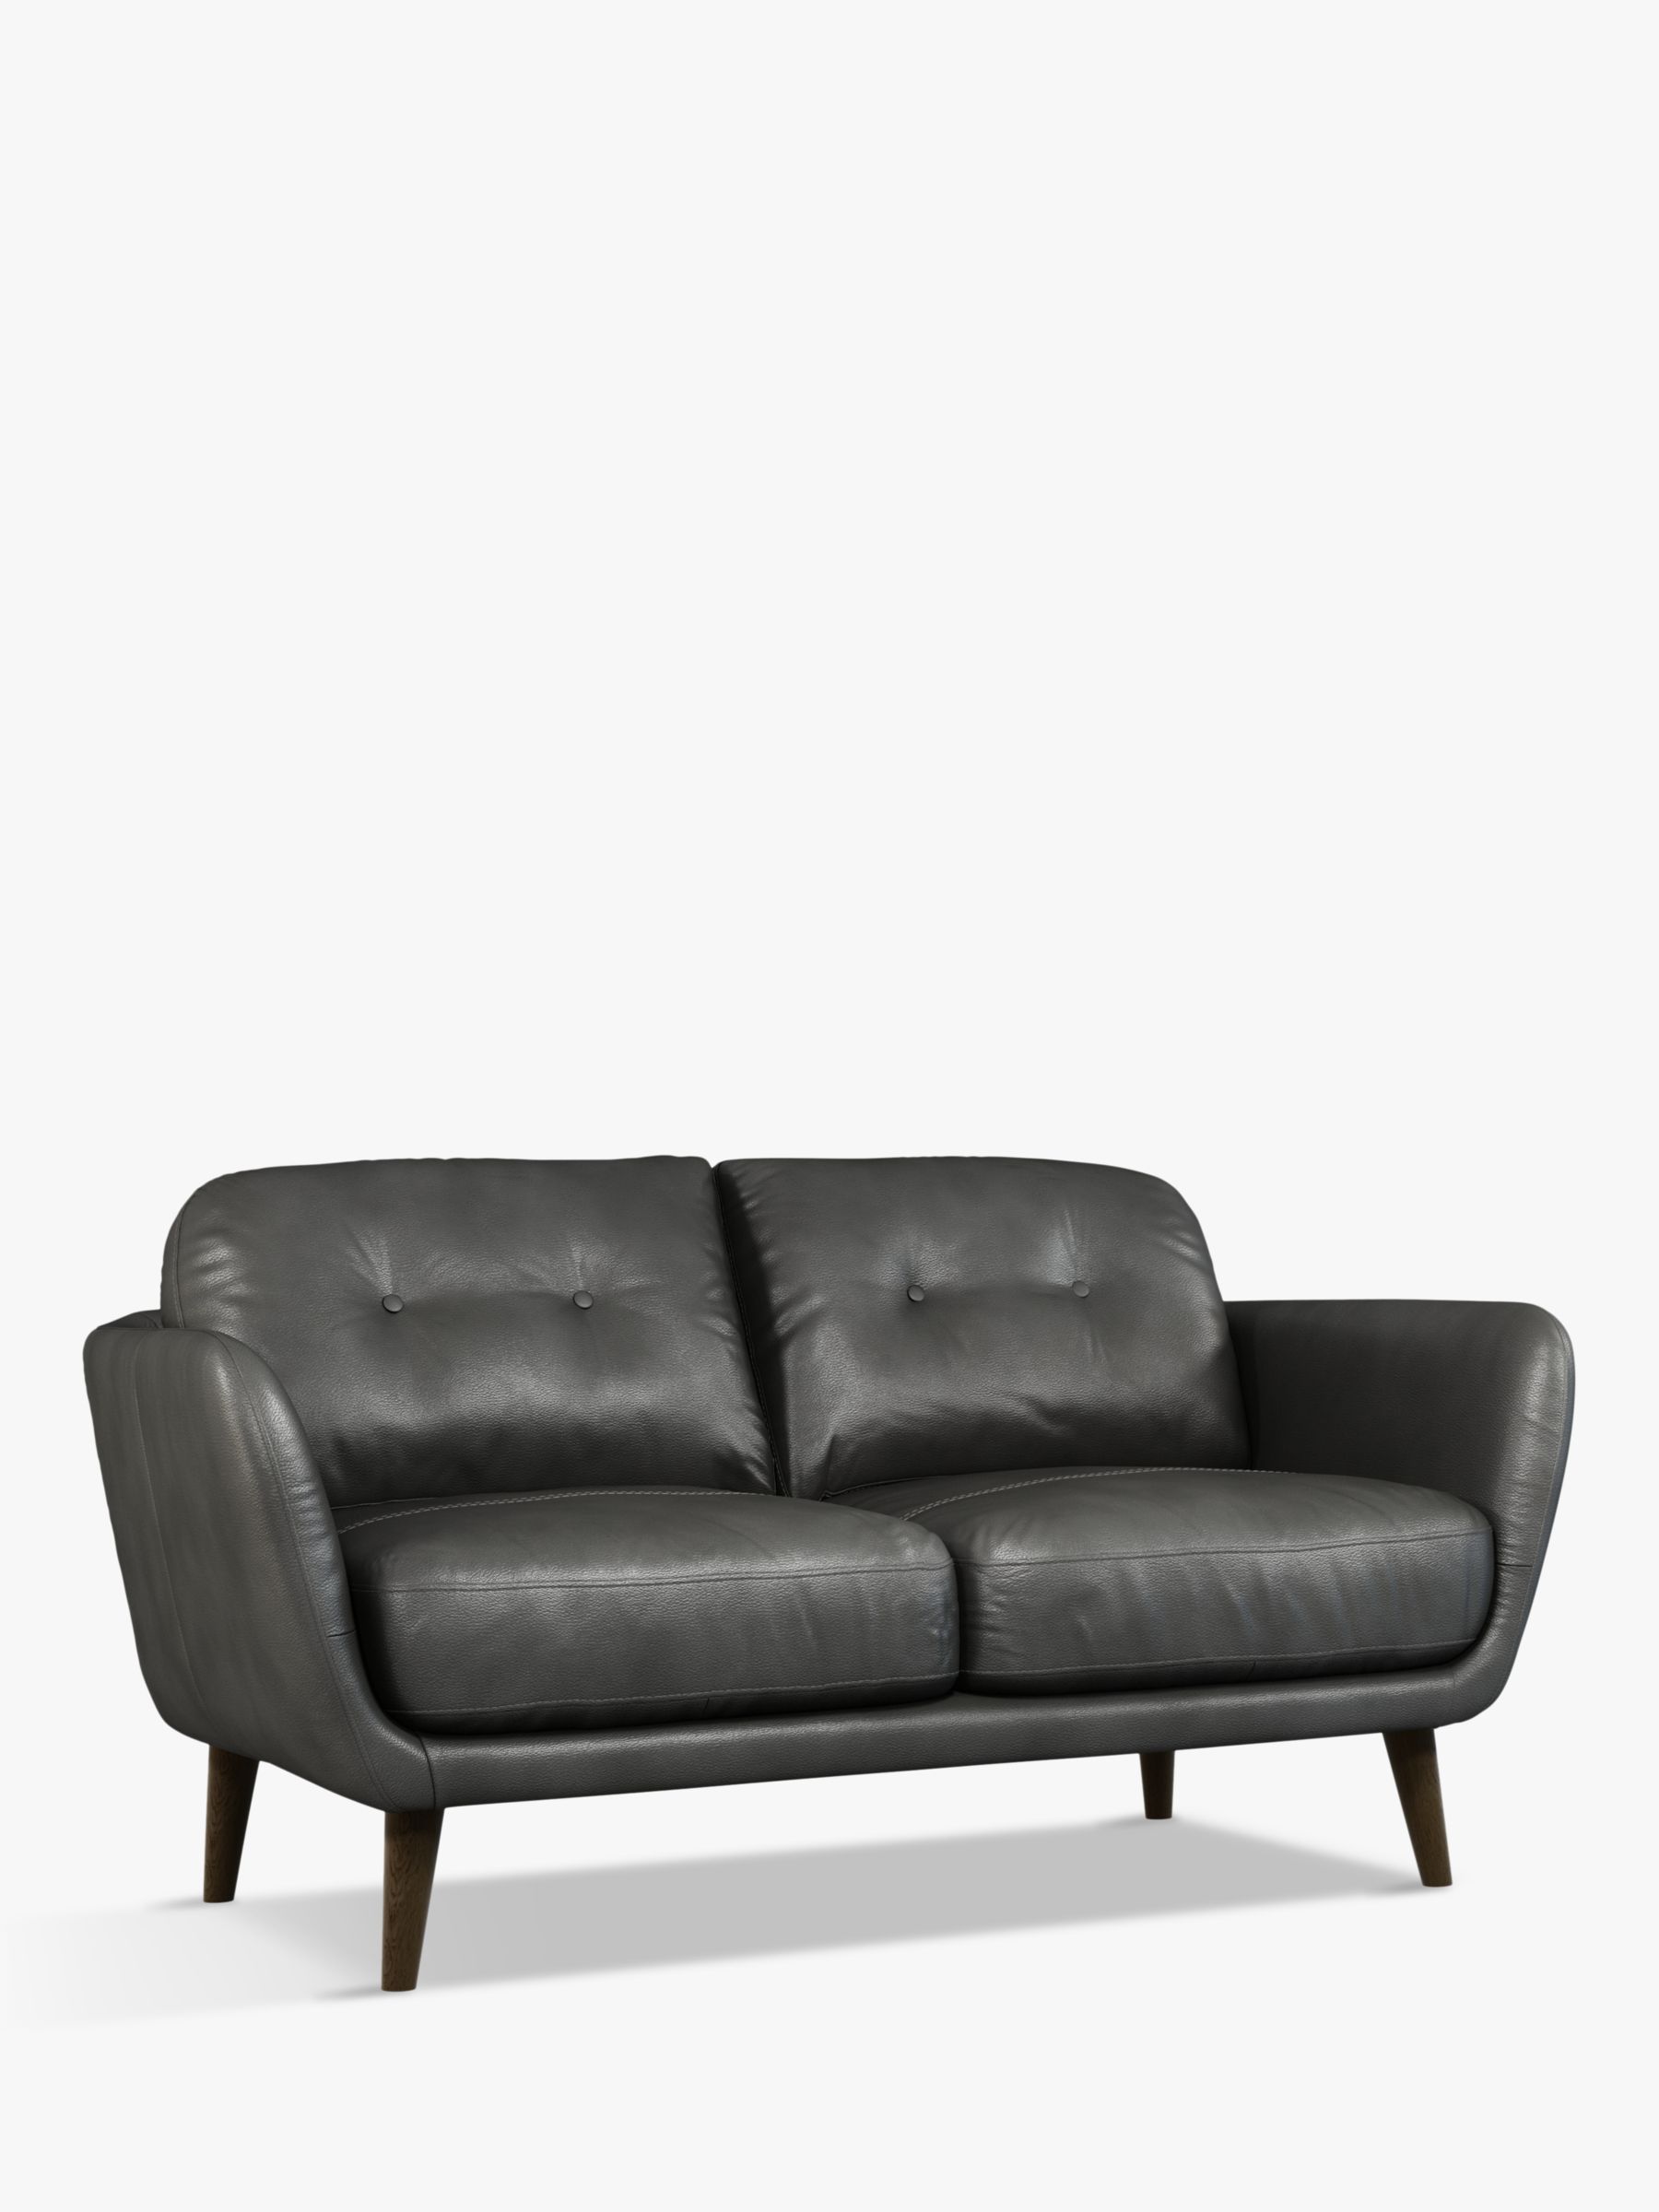 John Lewis Arlo Small 2 Seater Leather Sofa, Dark Leg, Winchester Anthracite